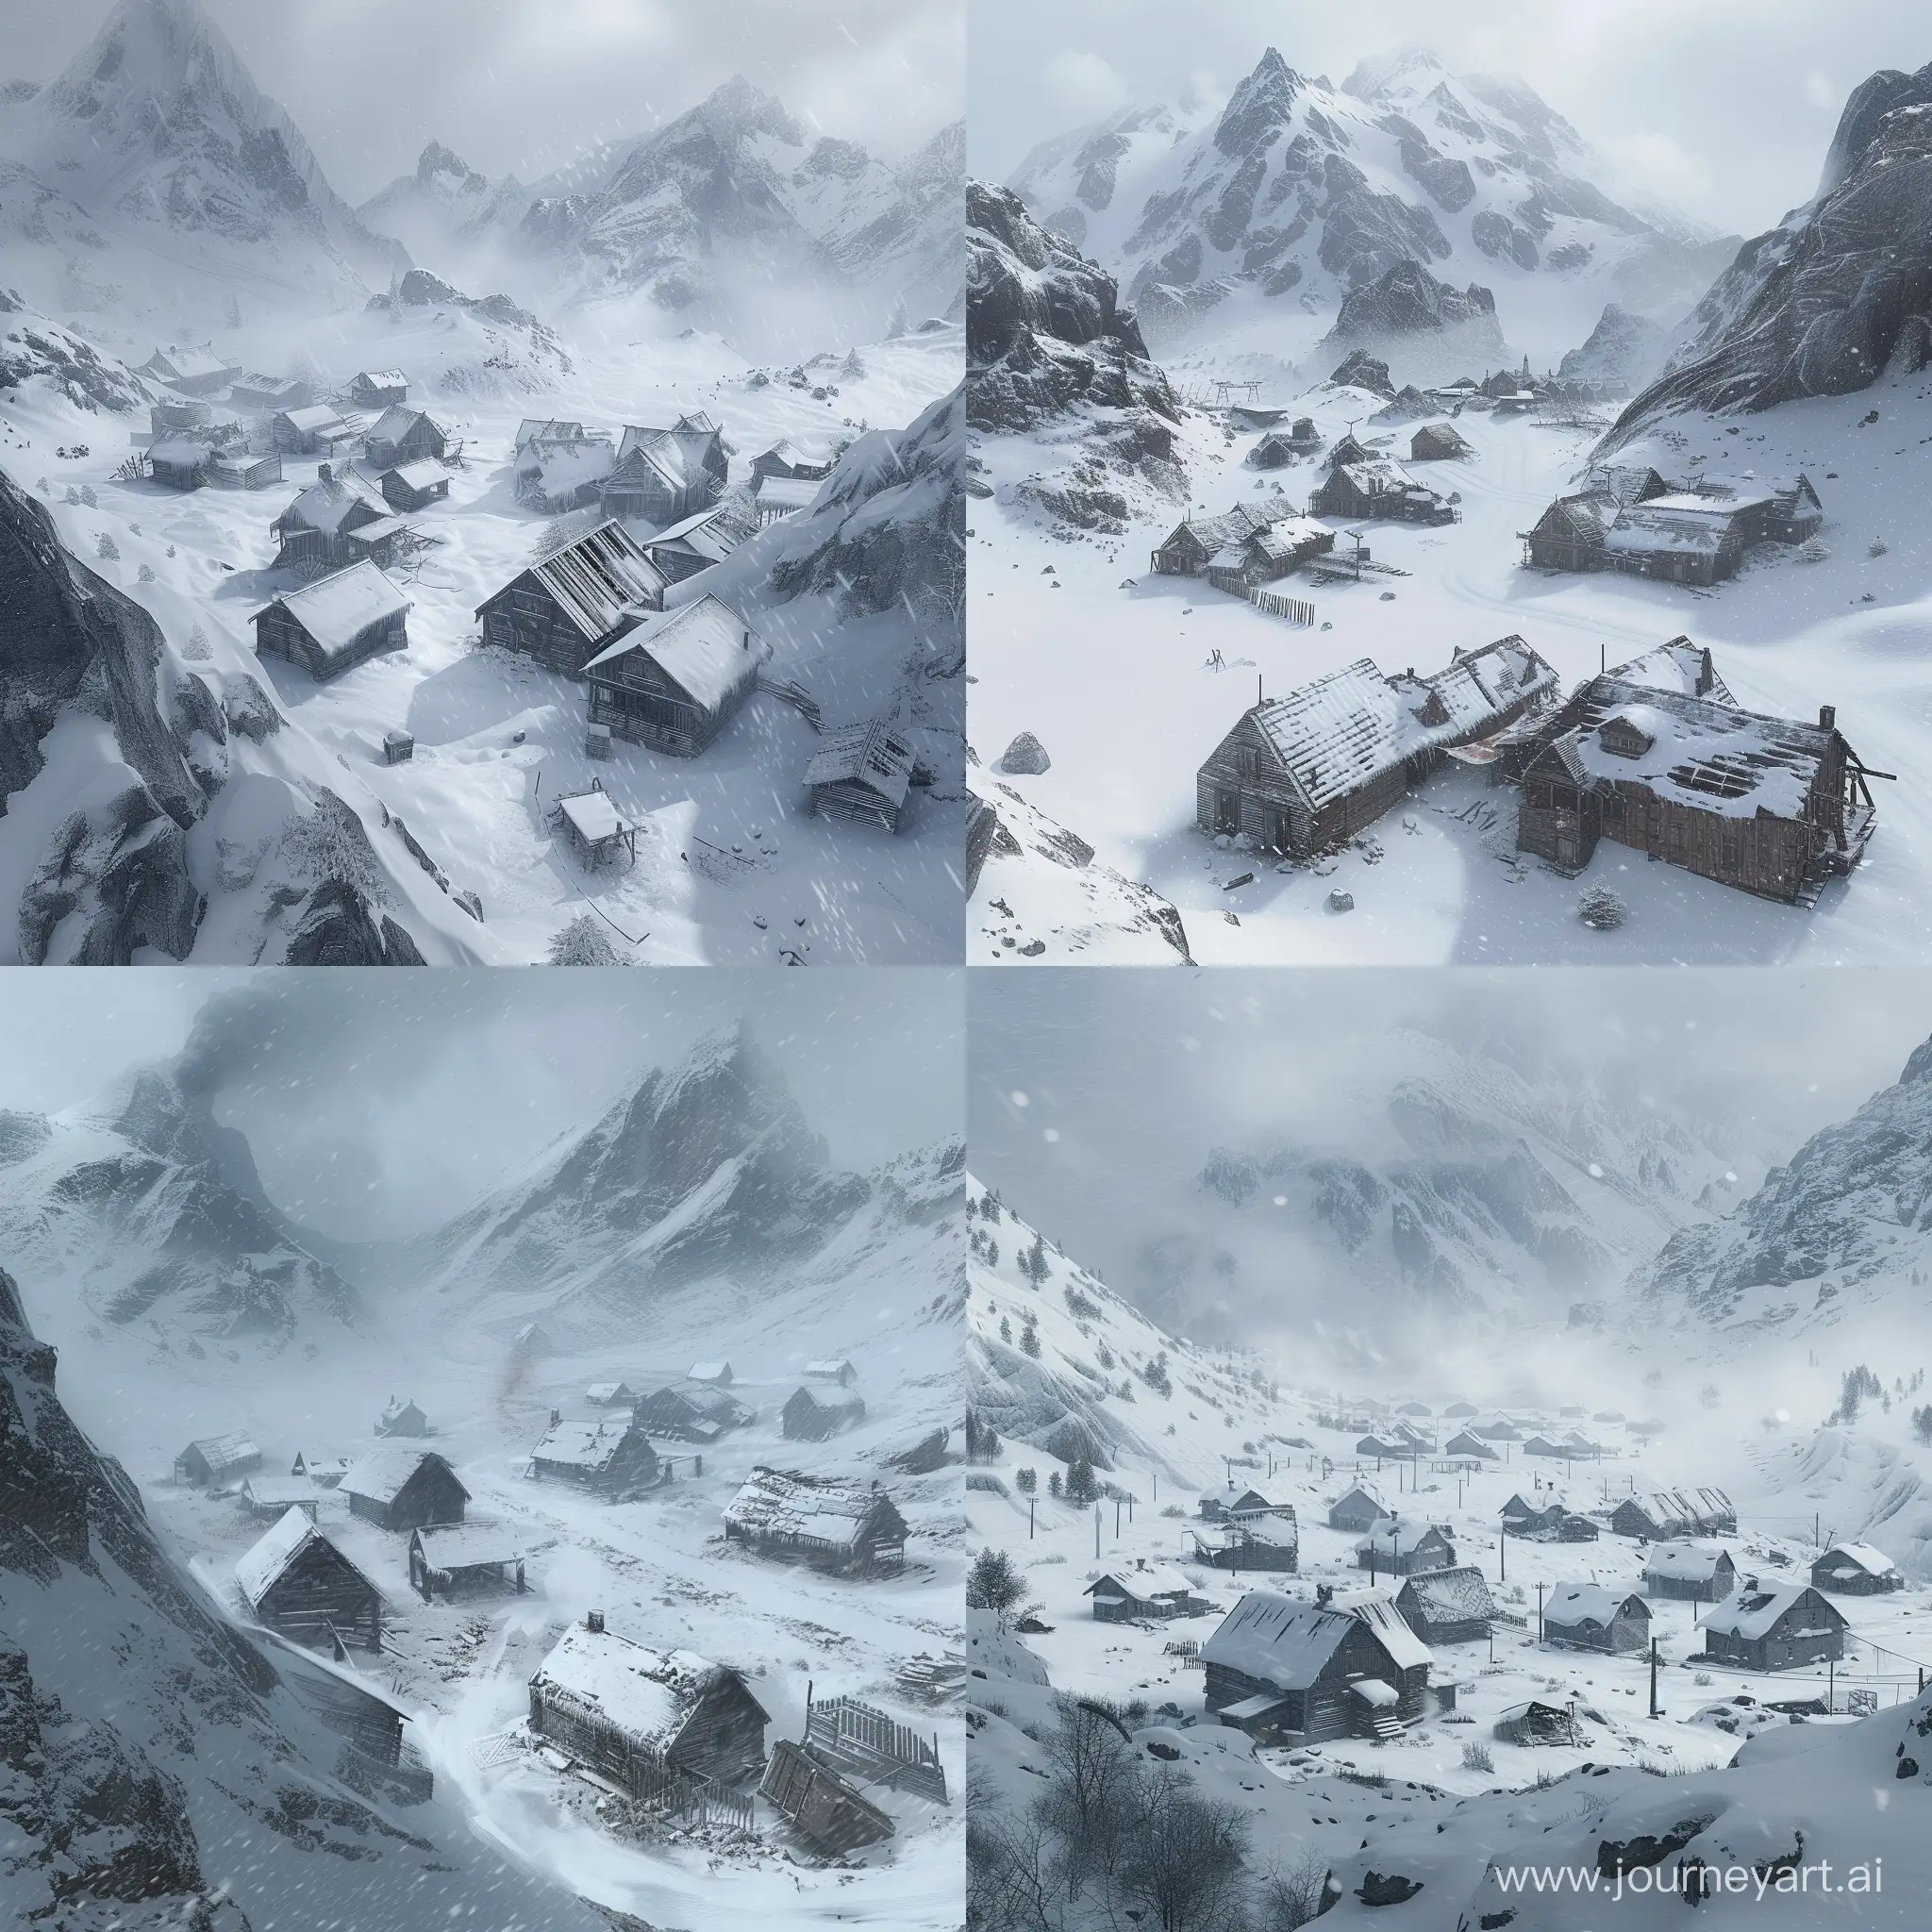 Desolate-SnowCovered-Village-Amidst-Harsh-Blizzard